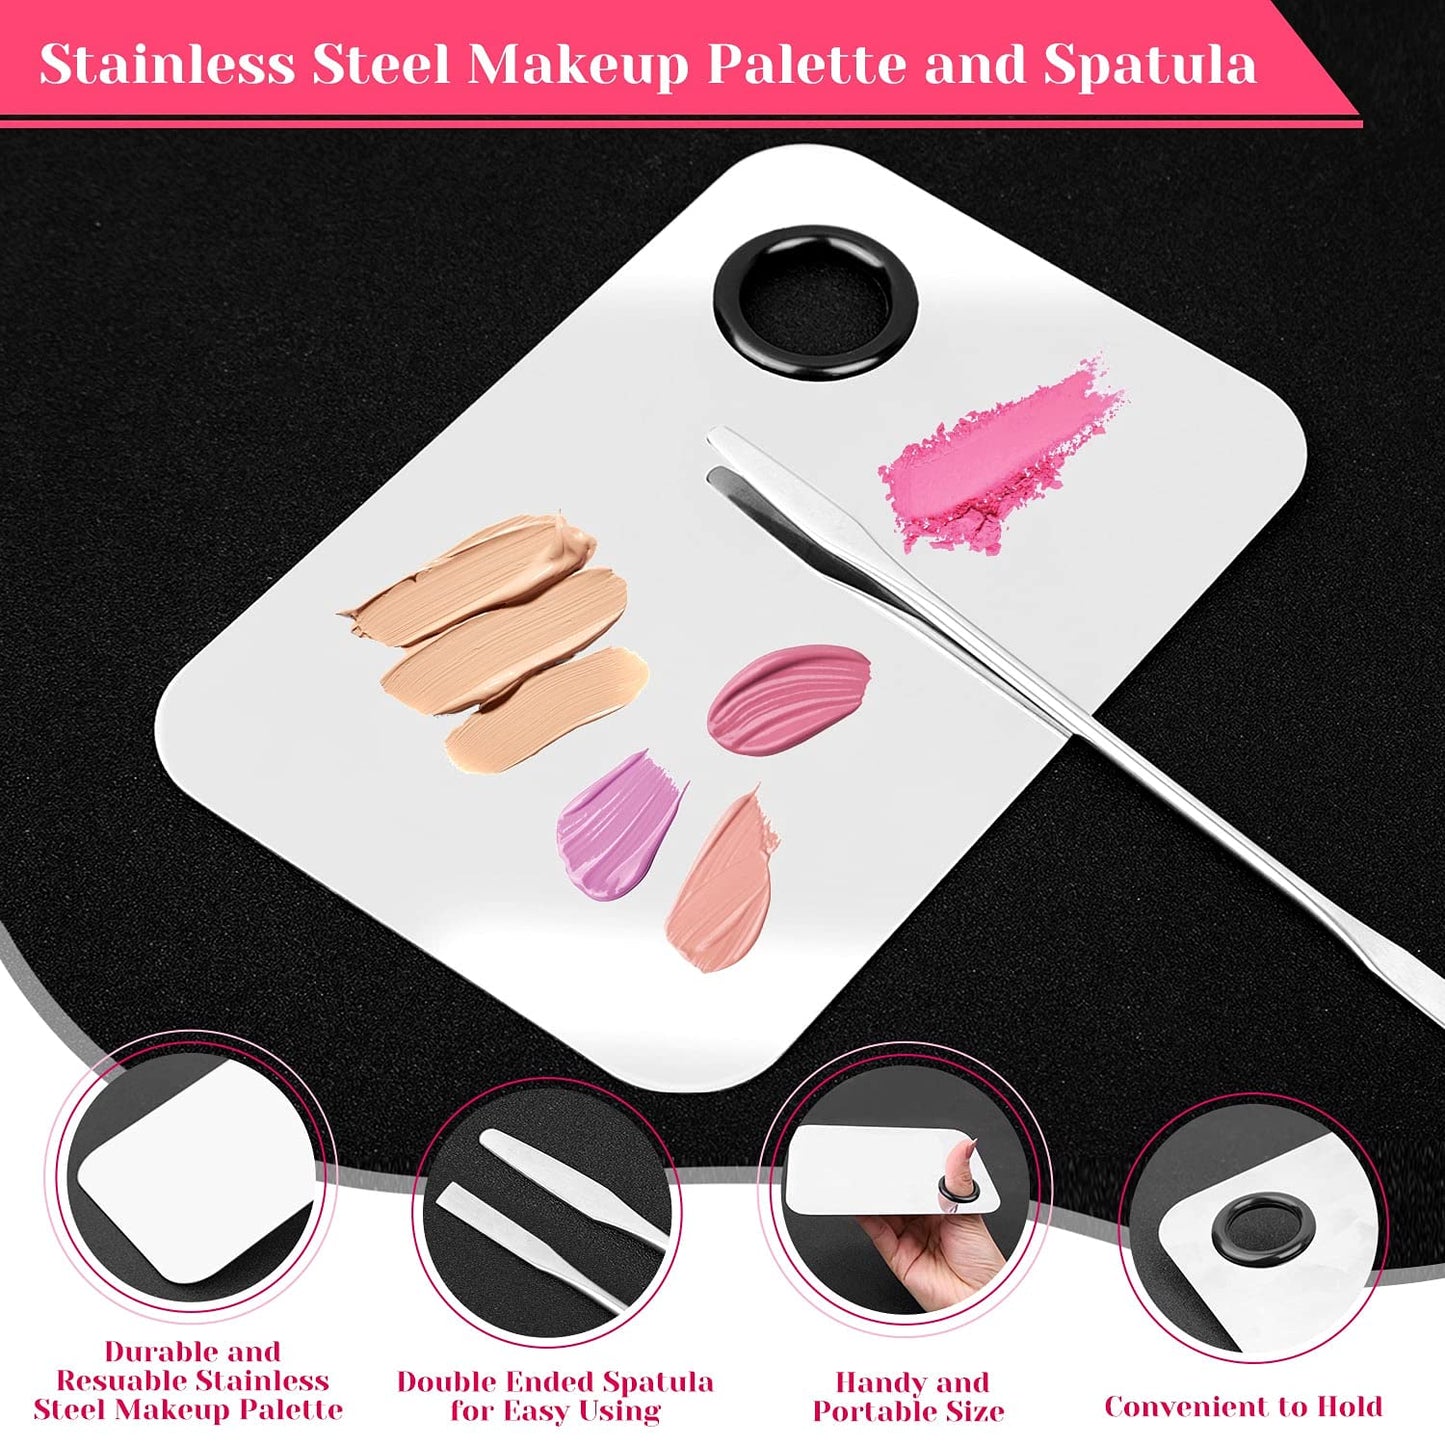 Disposable Makeup Applicators Kit, Shynek Makeup Mixing Tray with Disposable Makeup Accessories Tools for Makeup Artist Mascara Wands, Lip Applicators, Hair Clips with Organizer Box